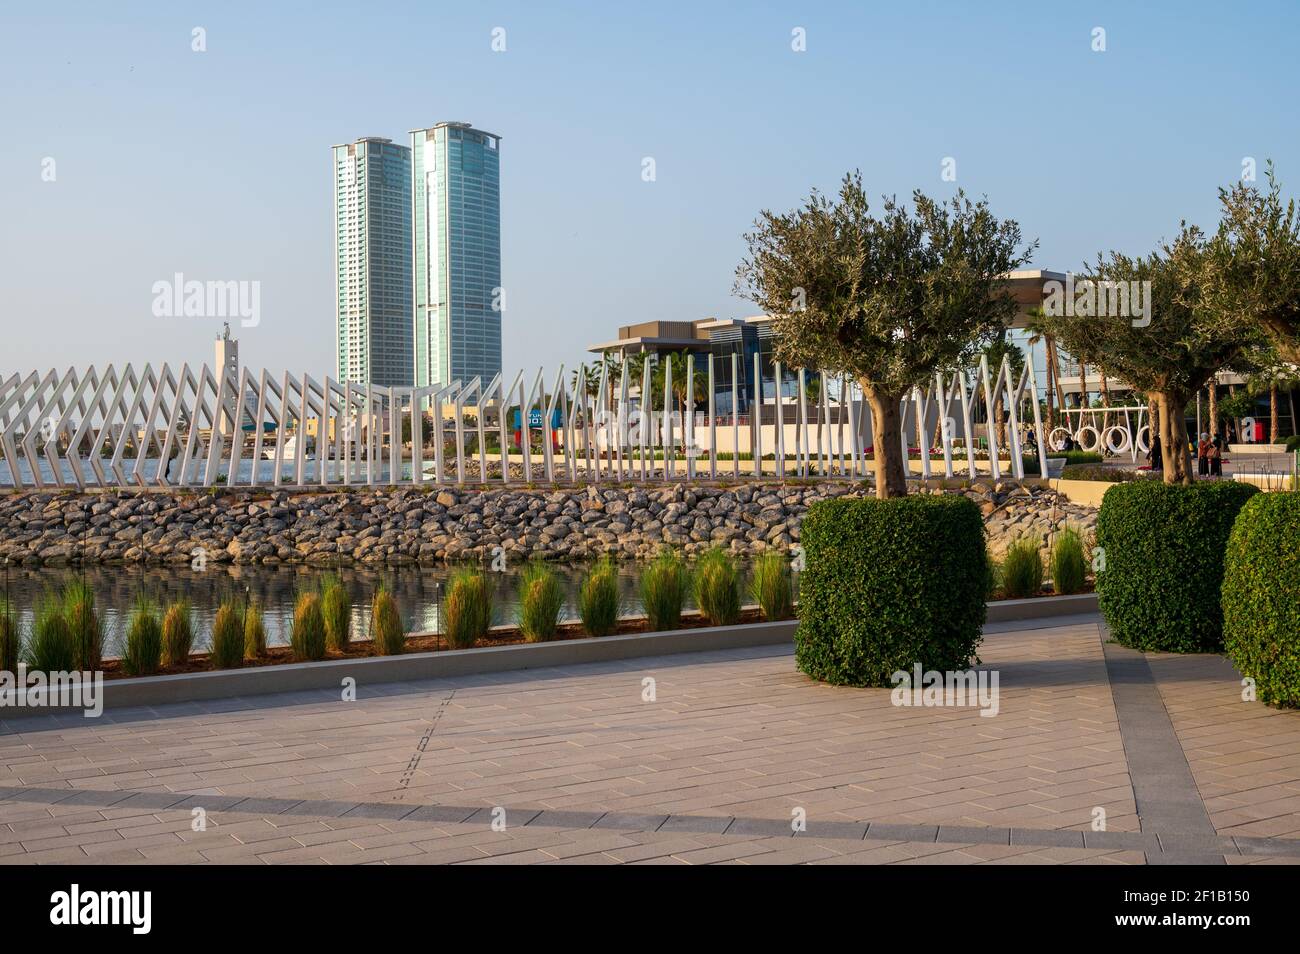 Ras al Khaimah, United Arab Emirates - January 24, 2021: New public walking and leisure area in Mannar mall by the Ras Al Khaimah corniche in the hear Stock Photo